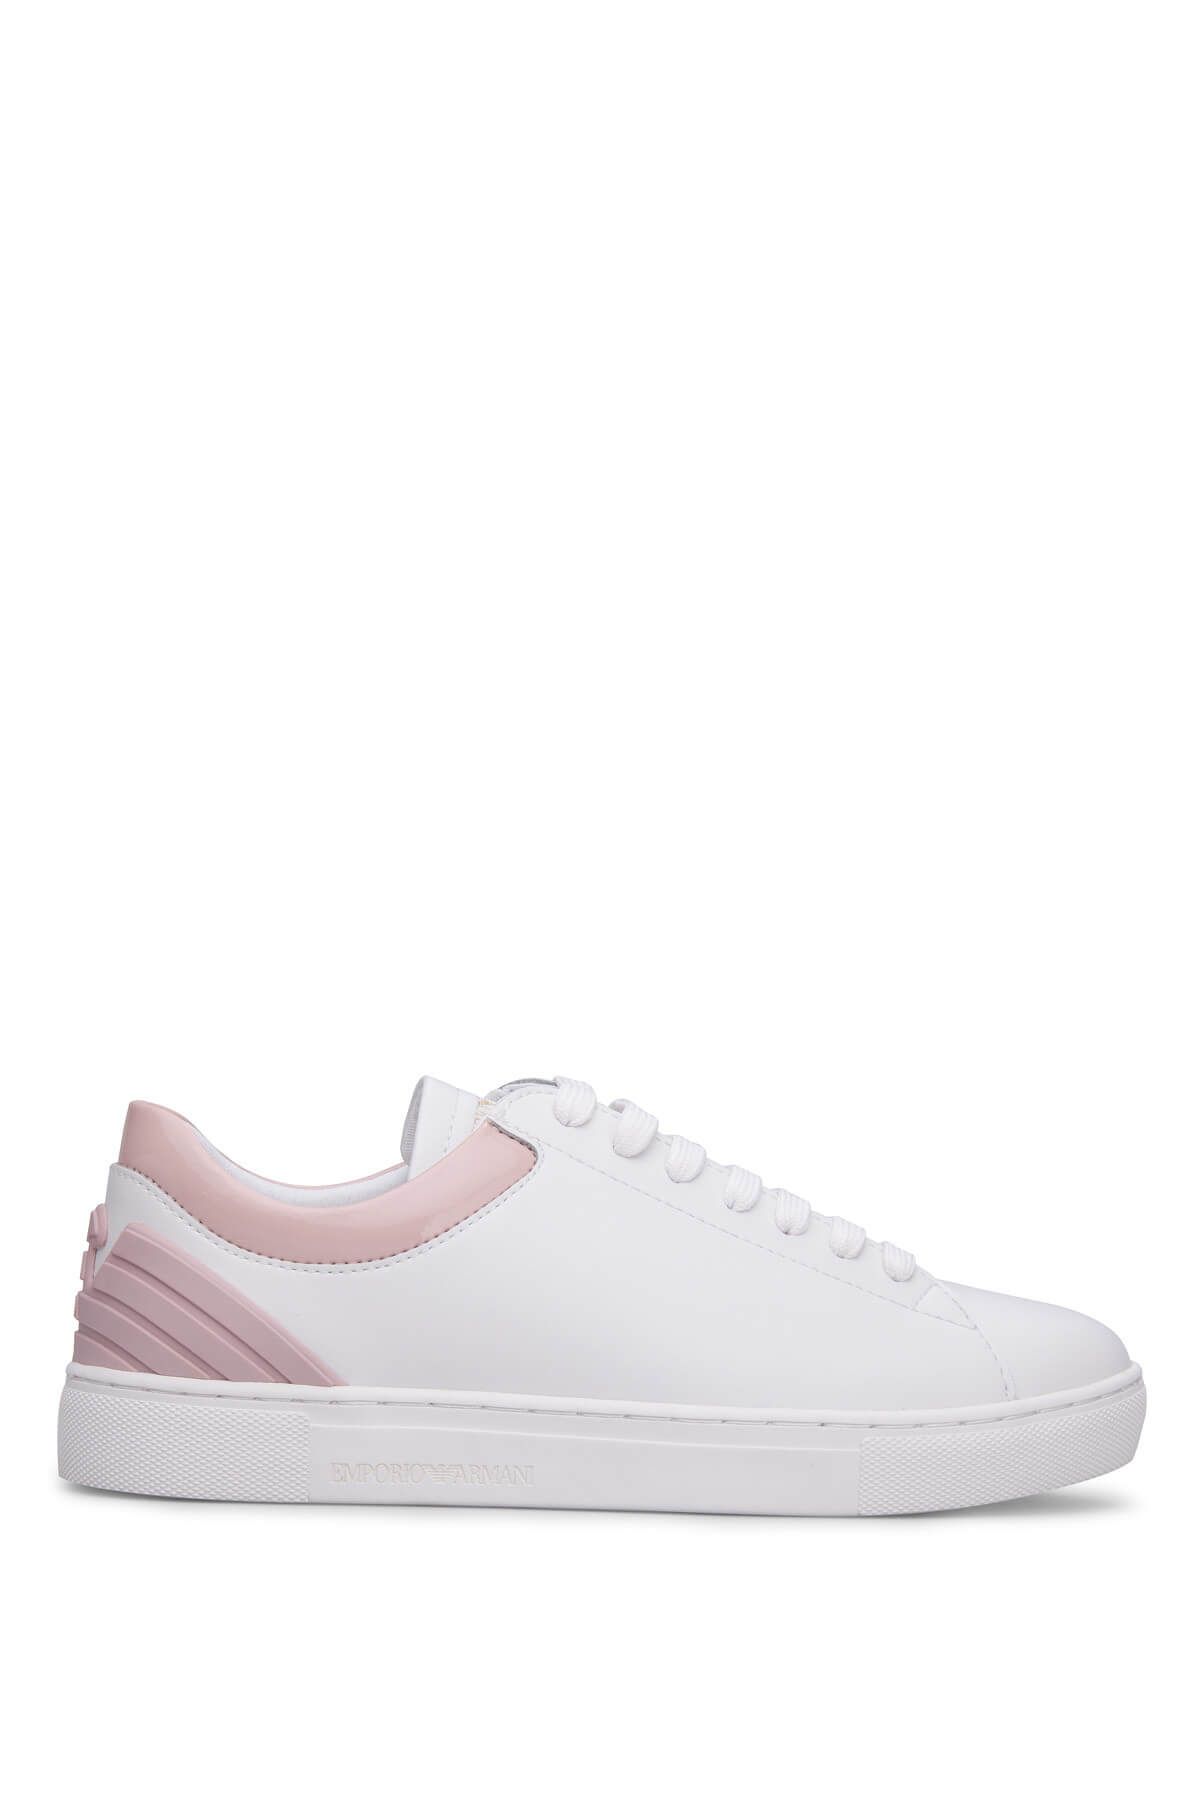 Emporio Armani Kadın Beyaz Sneaker X3X043 Xl211 C992